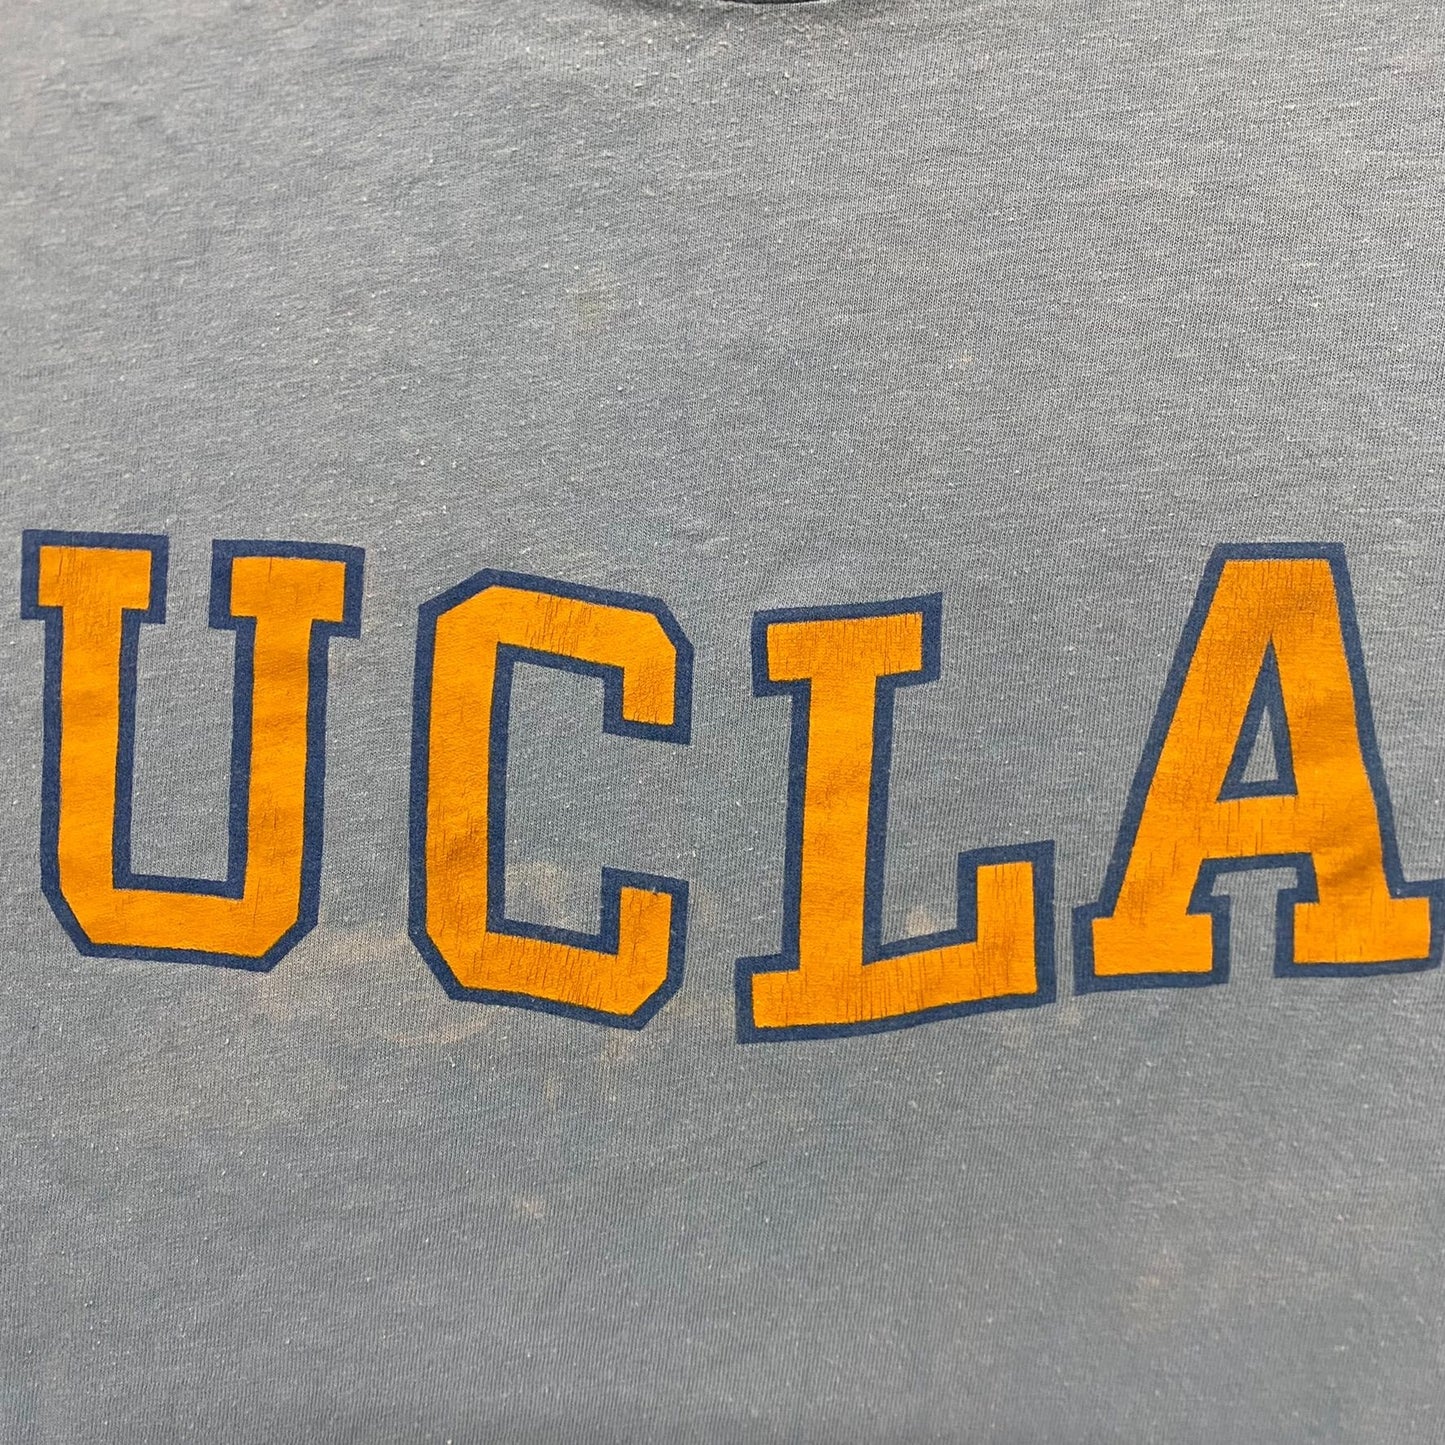 Vintage 80s UCLA Los Angeles Single Stitch College Sports Tee